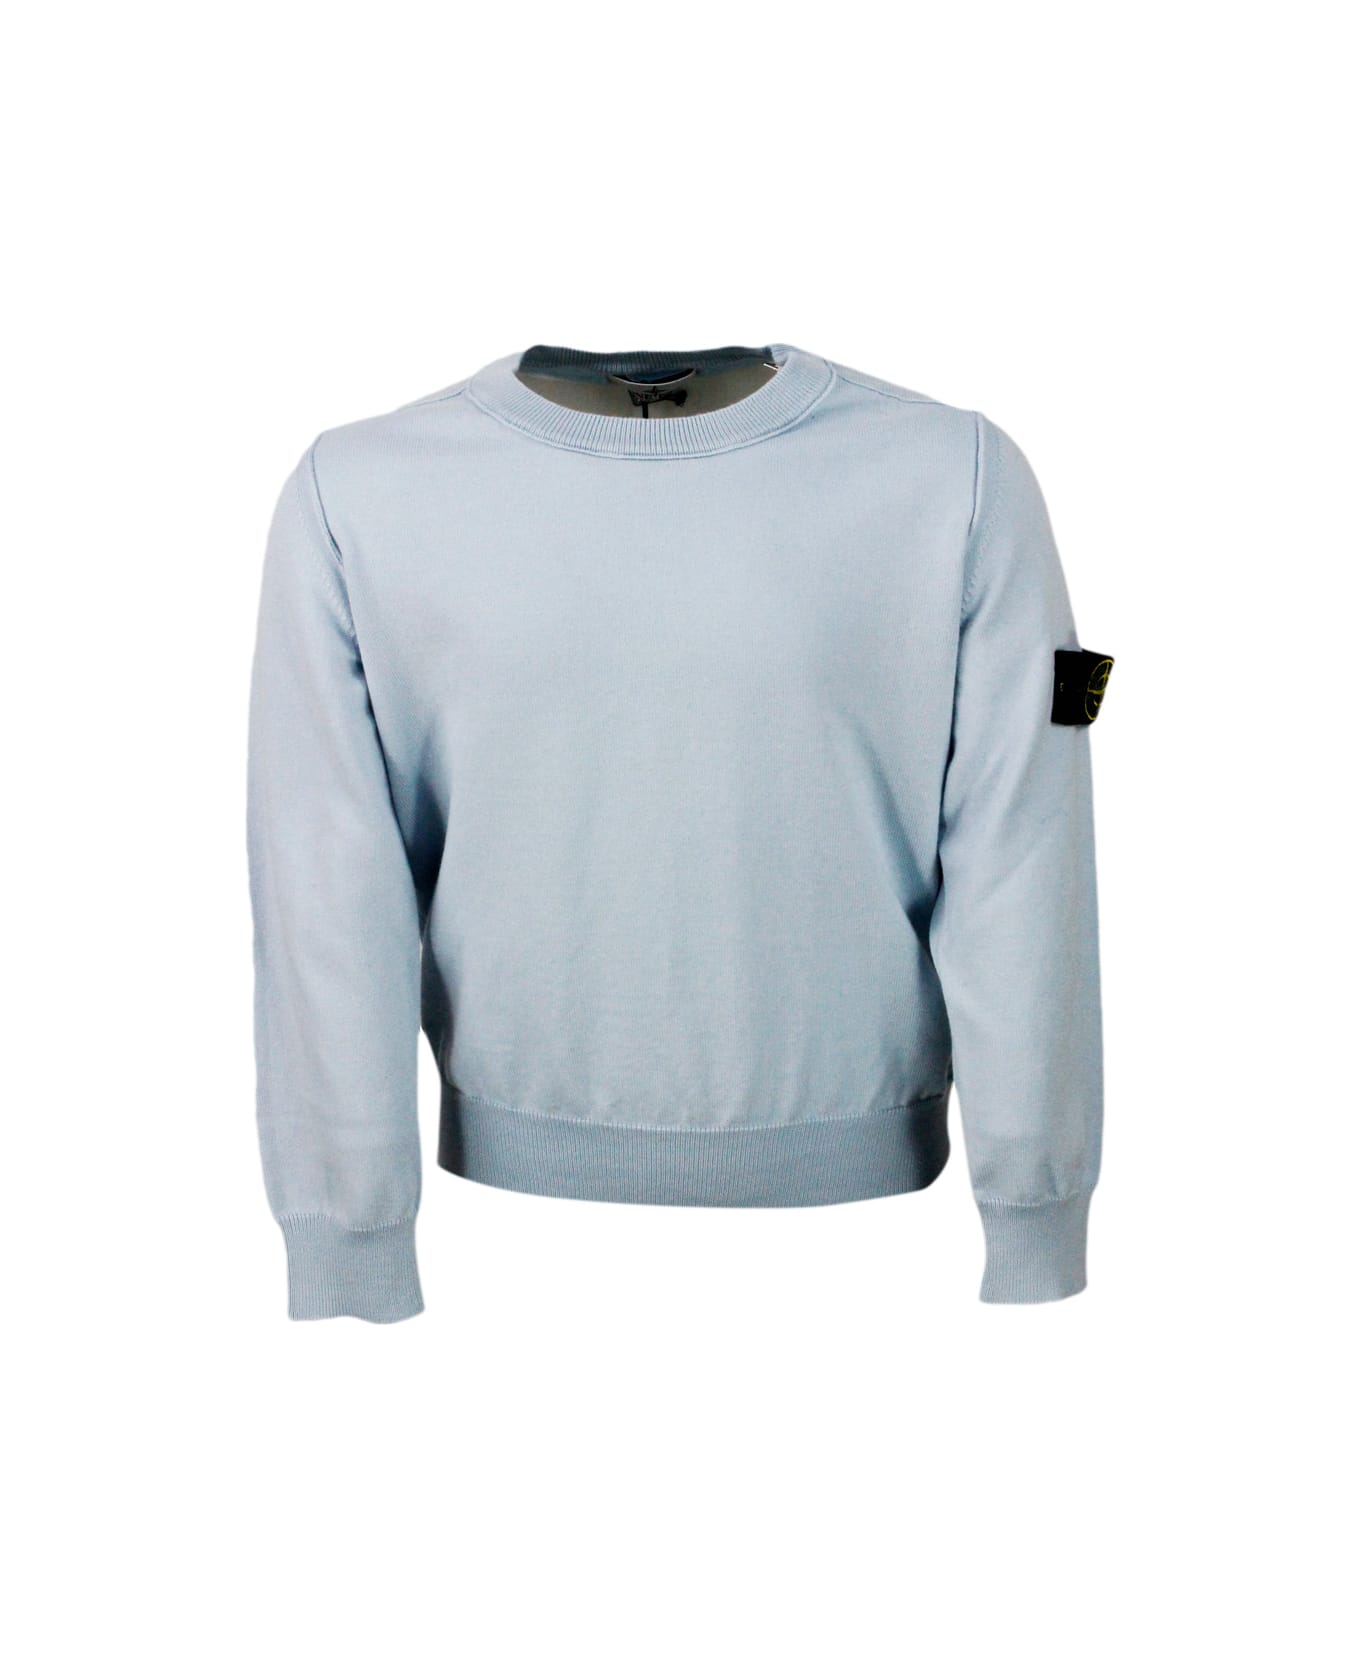 Stone Island Crew-neck, Long-sleeved Cotton Sweater With Raised Stitching - Light Blu